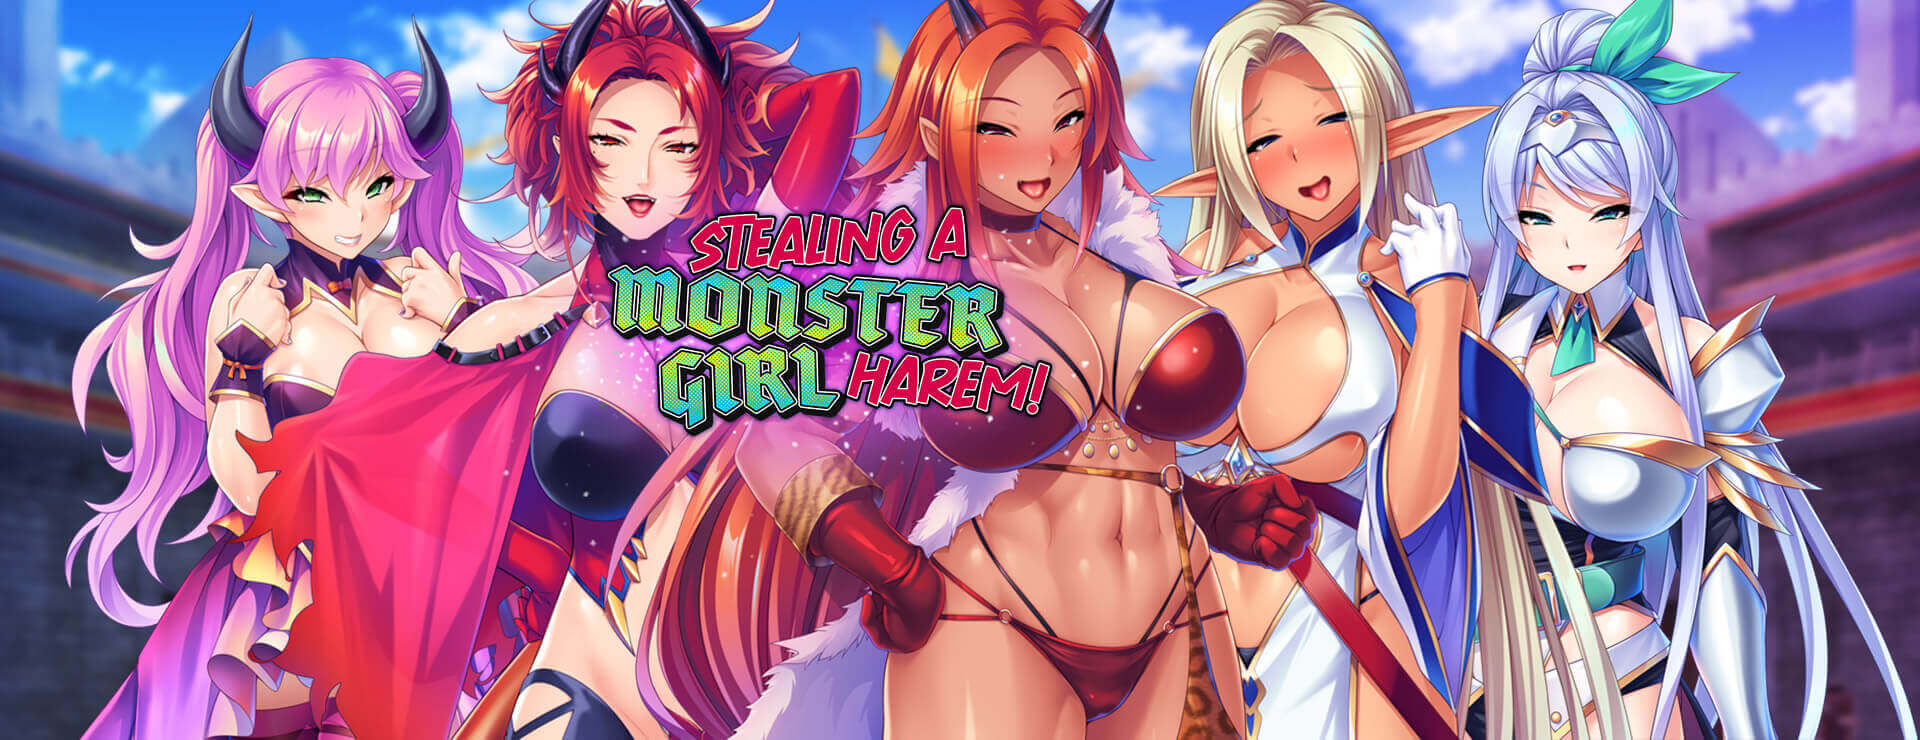 Stealing a Monster Girl Harem - Novela Visual Juego